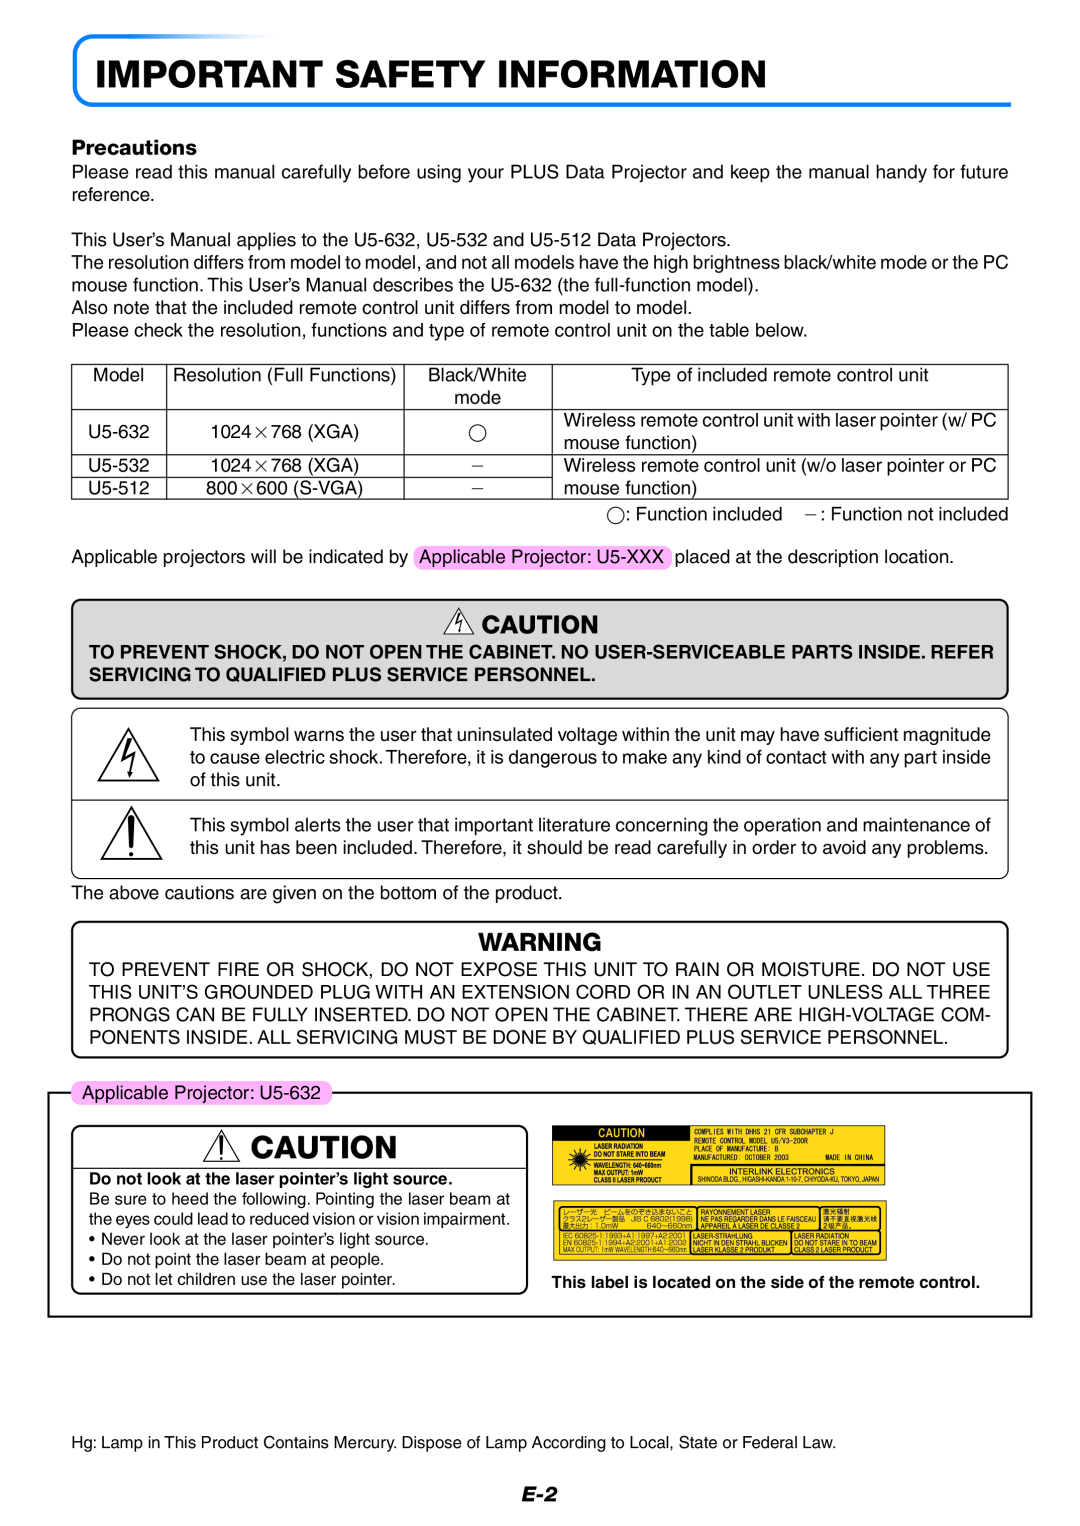 PLUS Vision U5-512, U5-632, U5-532 user manual Important Safety Information, Precautions 